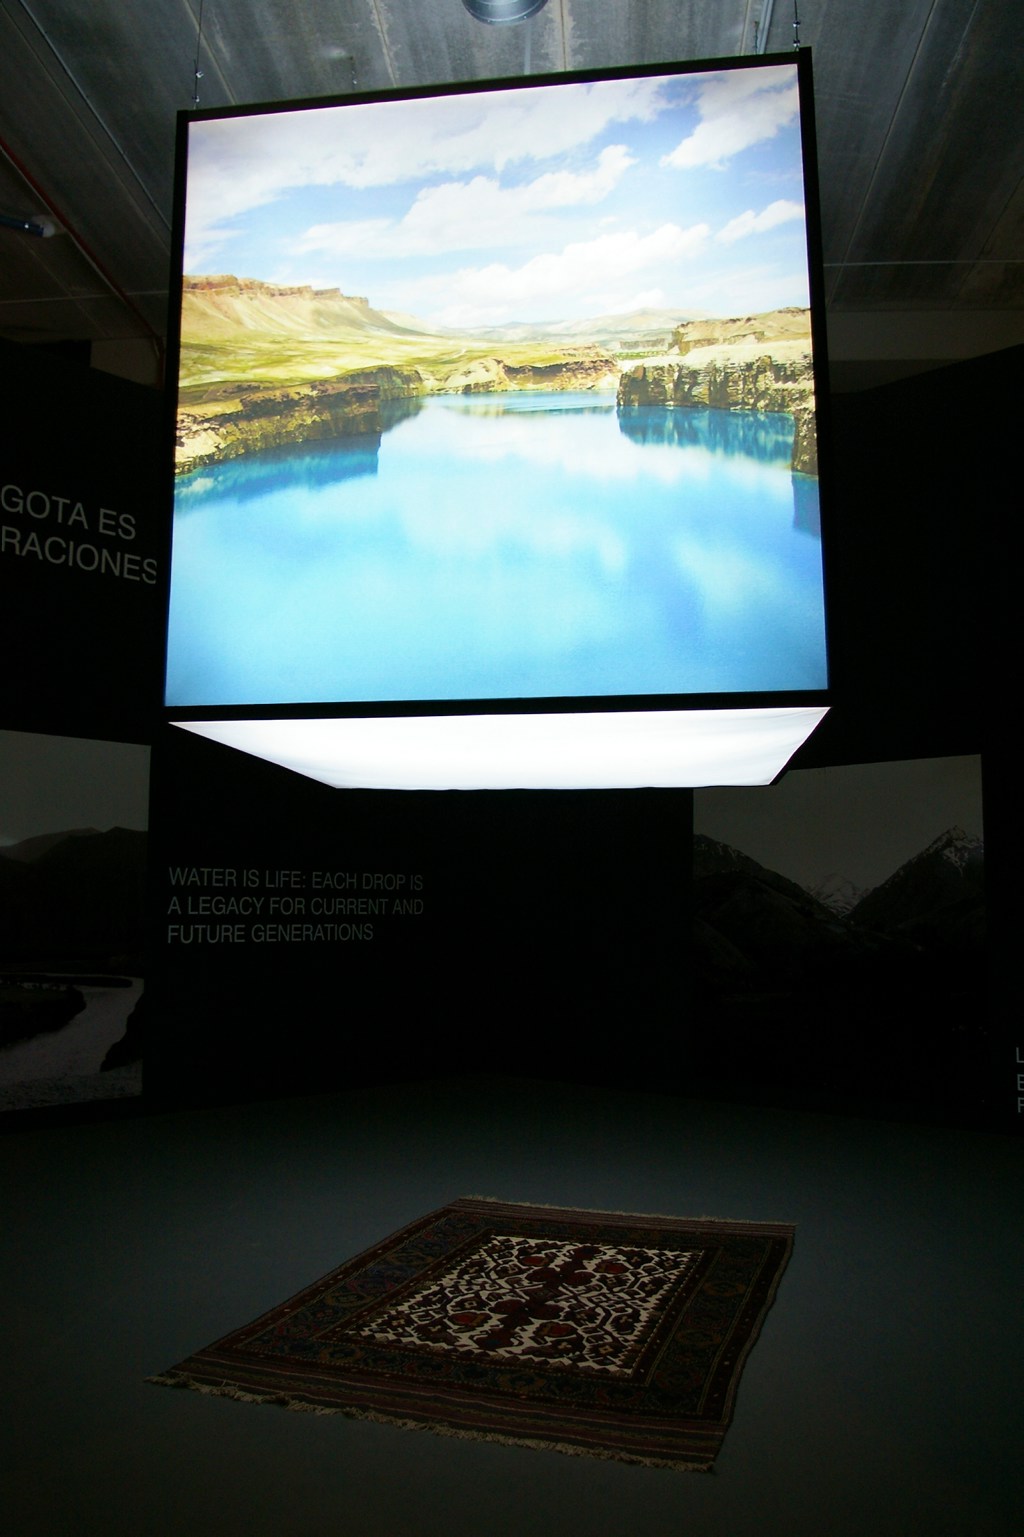 Expo Zaragoza: Carpet and screen